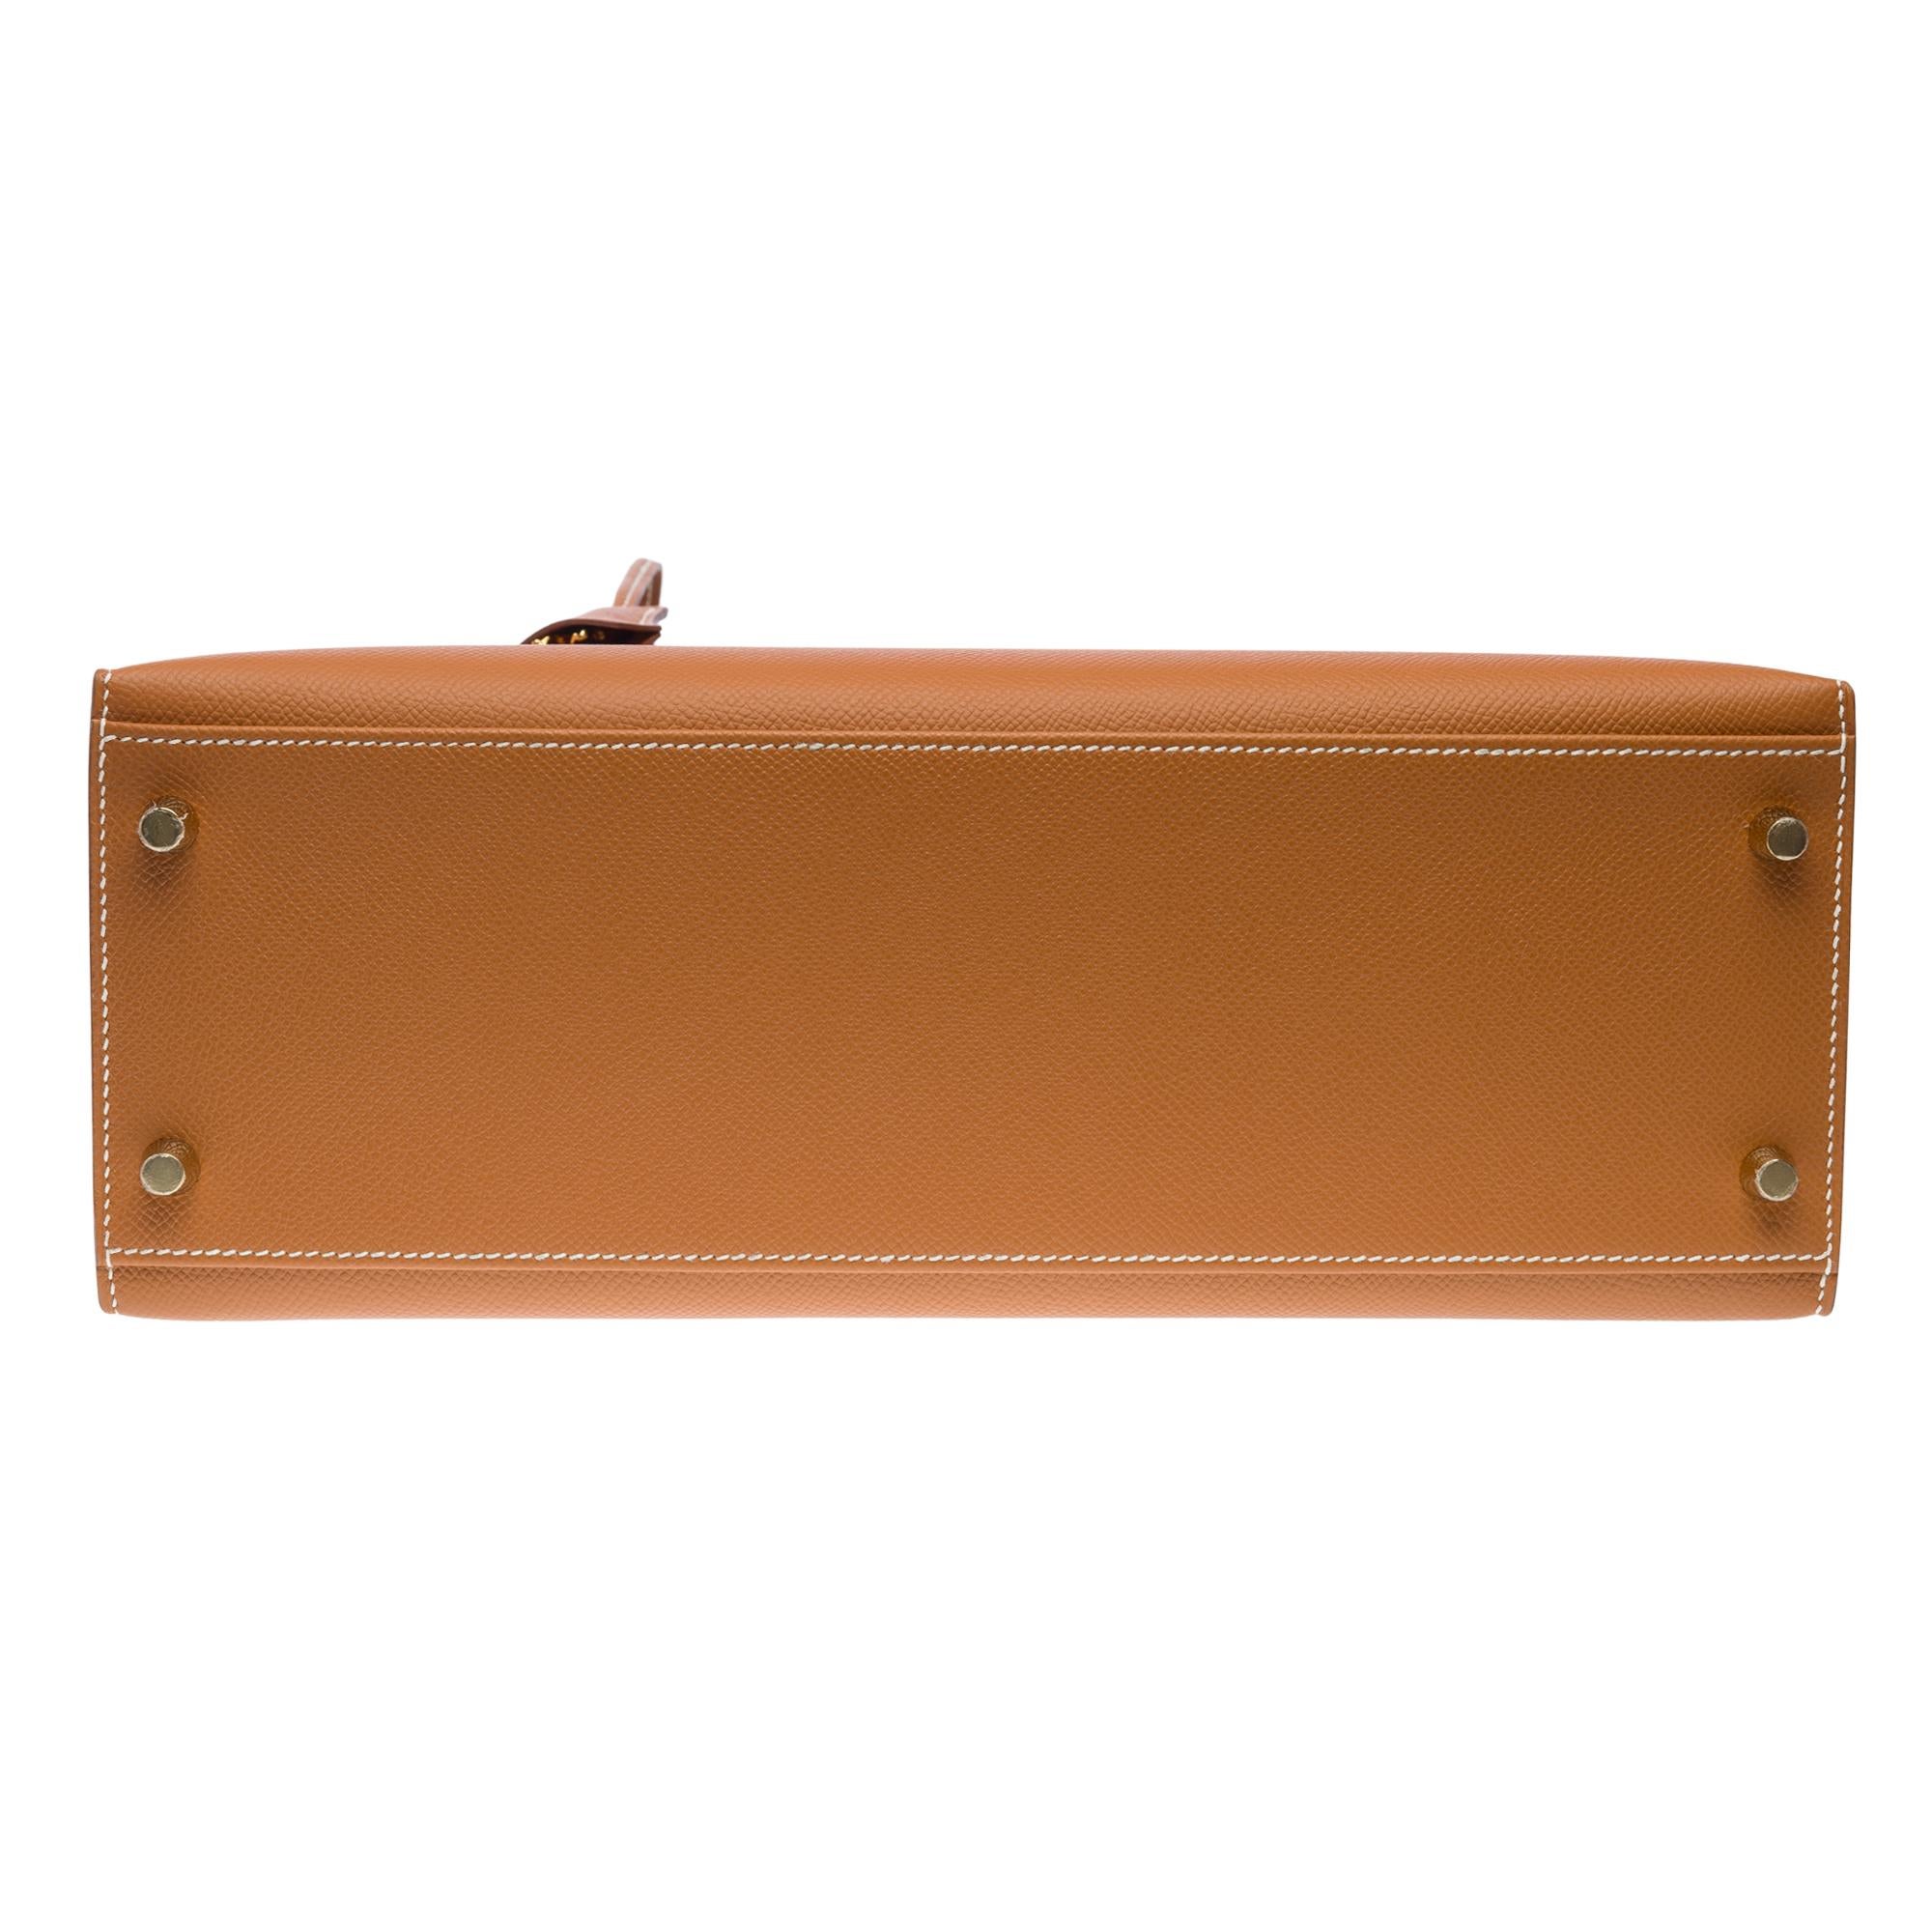 New Hermès Kelly 32 sellier handbag strap in Camel Epsom calf leather, GHW For Sale 7